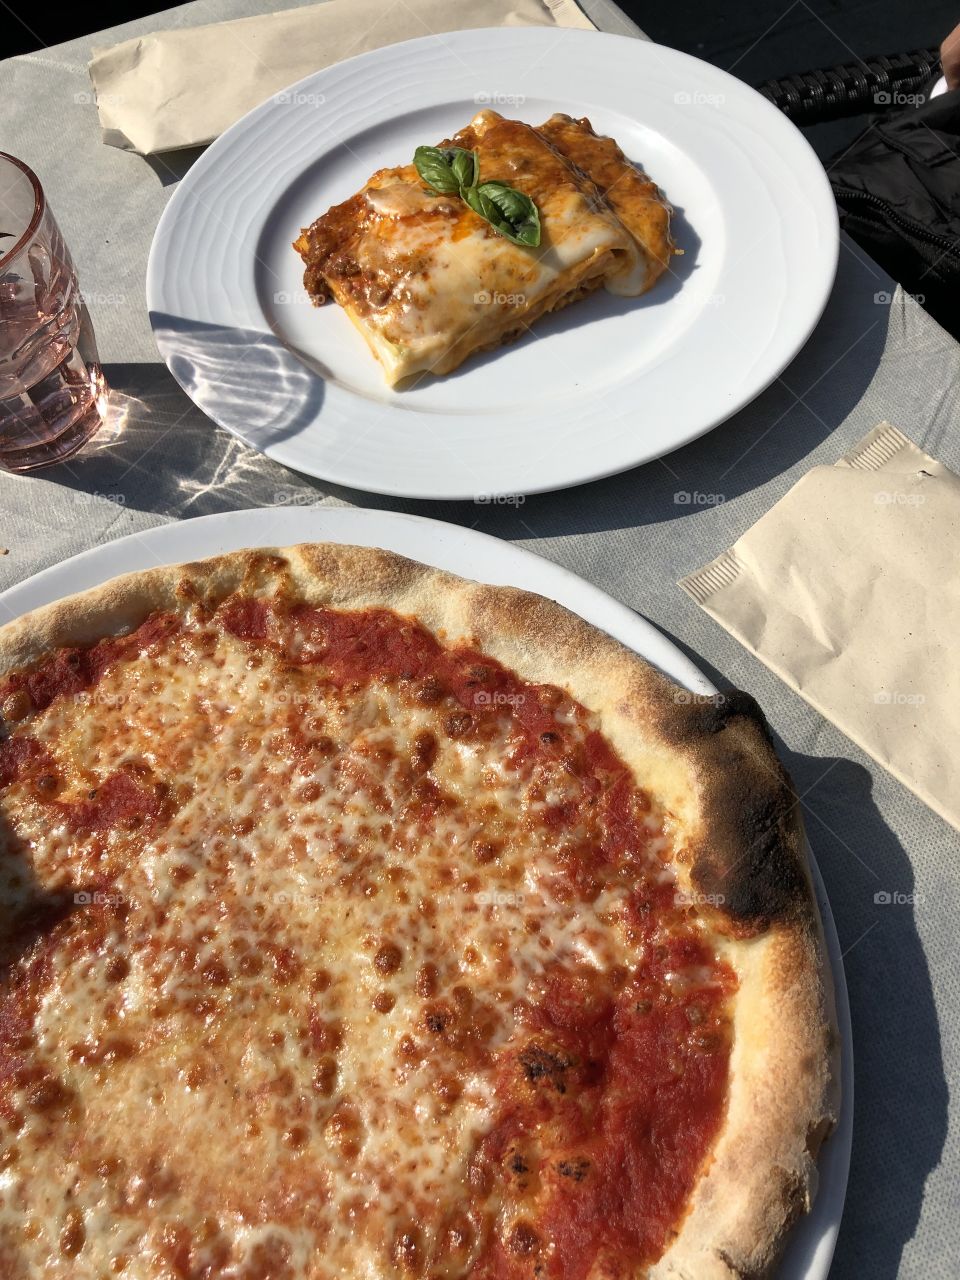 Cheesy pizza and lasagna